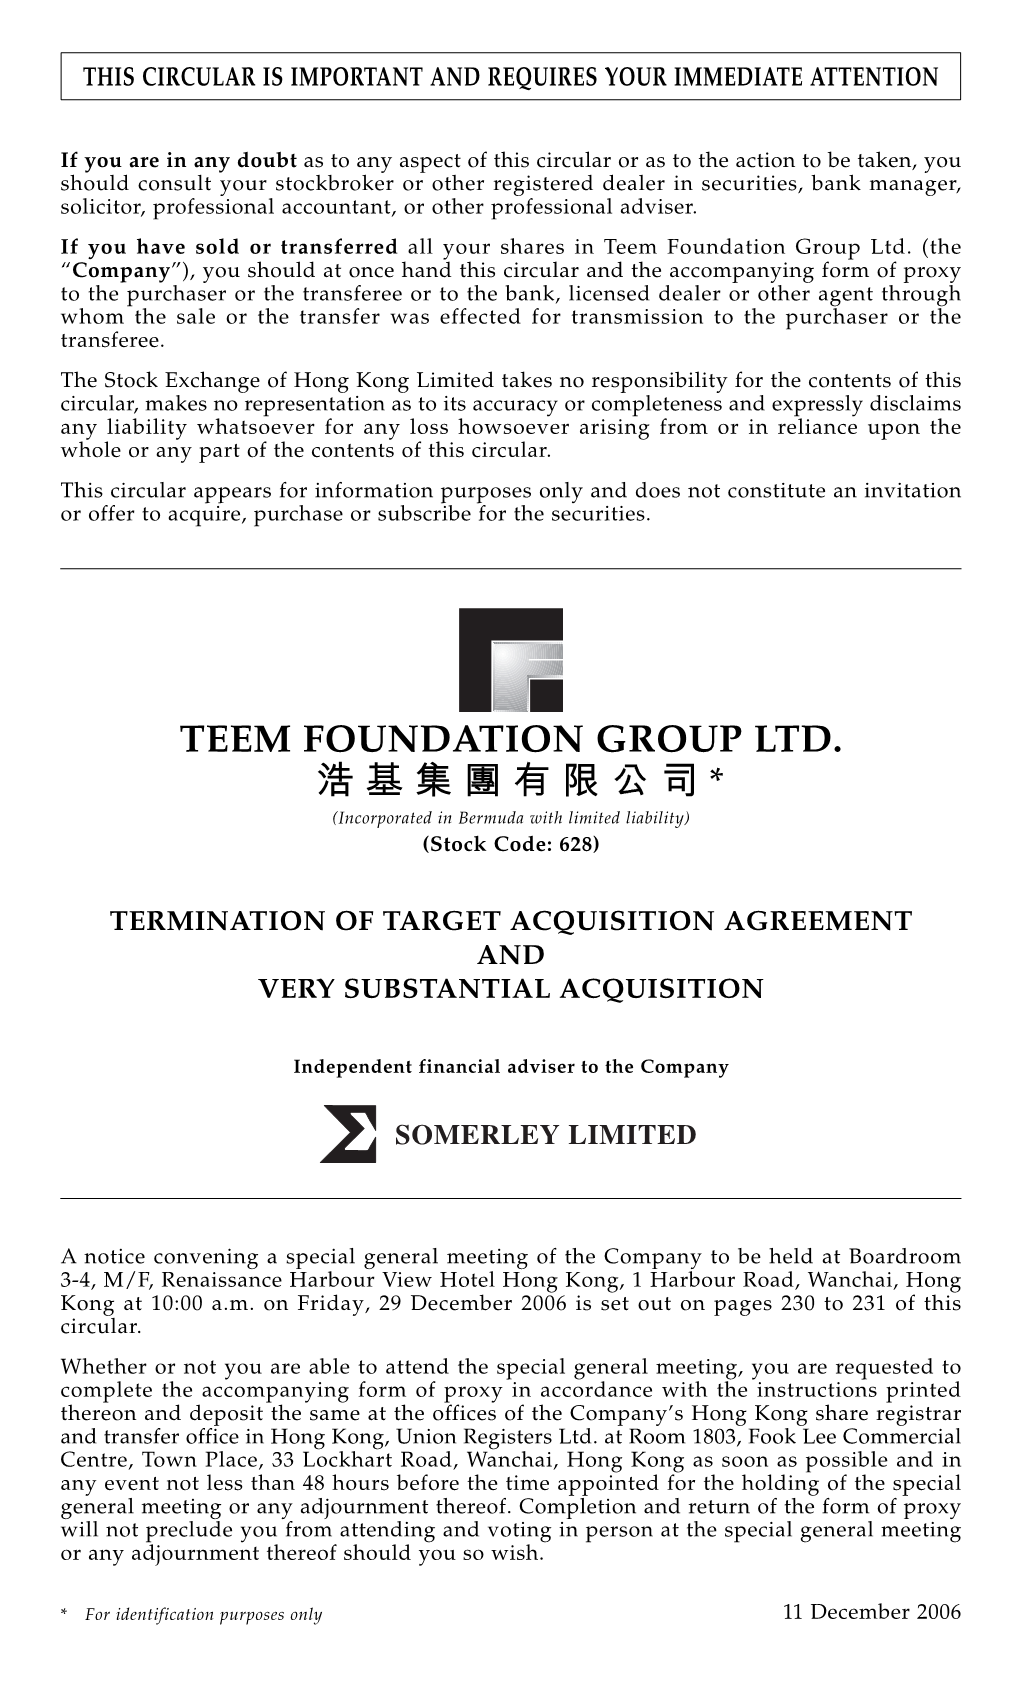 Teem Foundation Group Ltd. 浩基集團有限公司 *